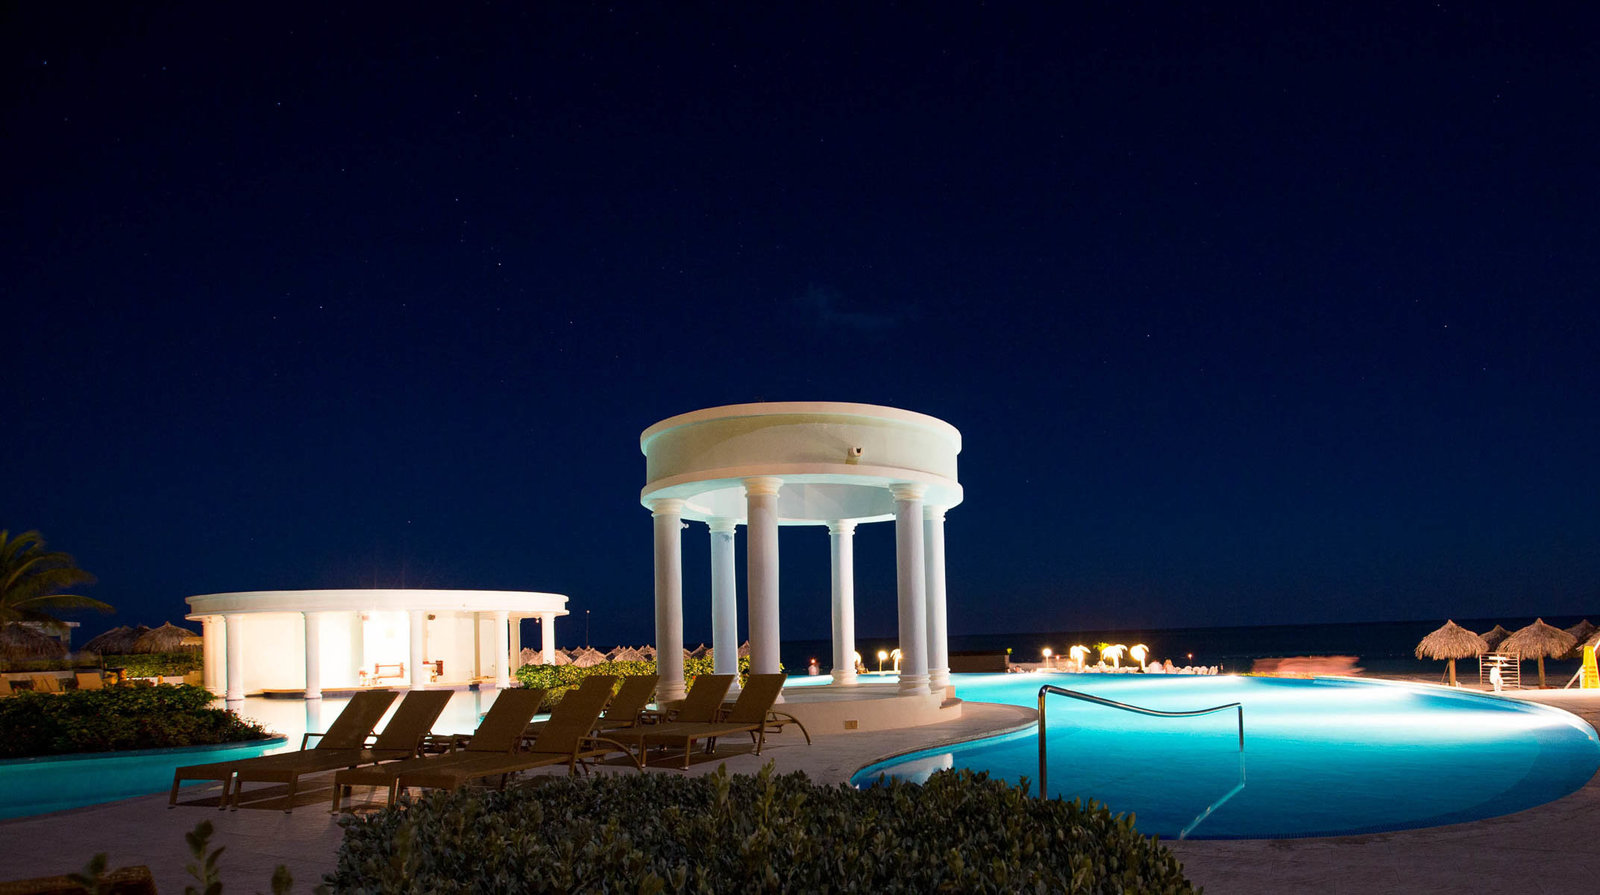 Jamaican Resort pool and gazebo at night